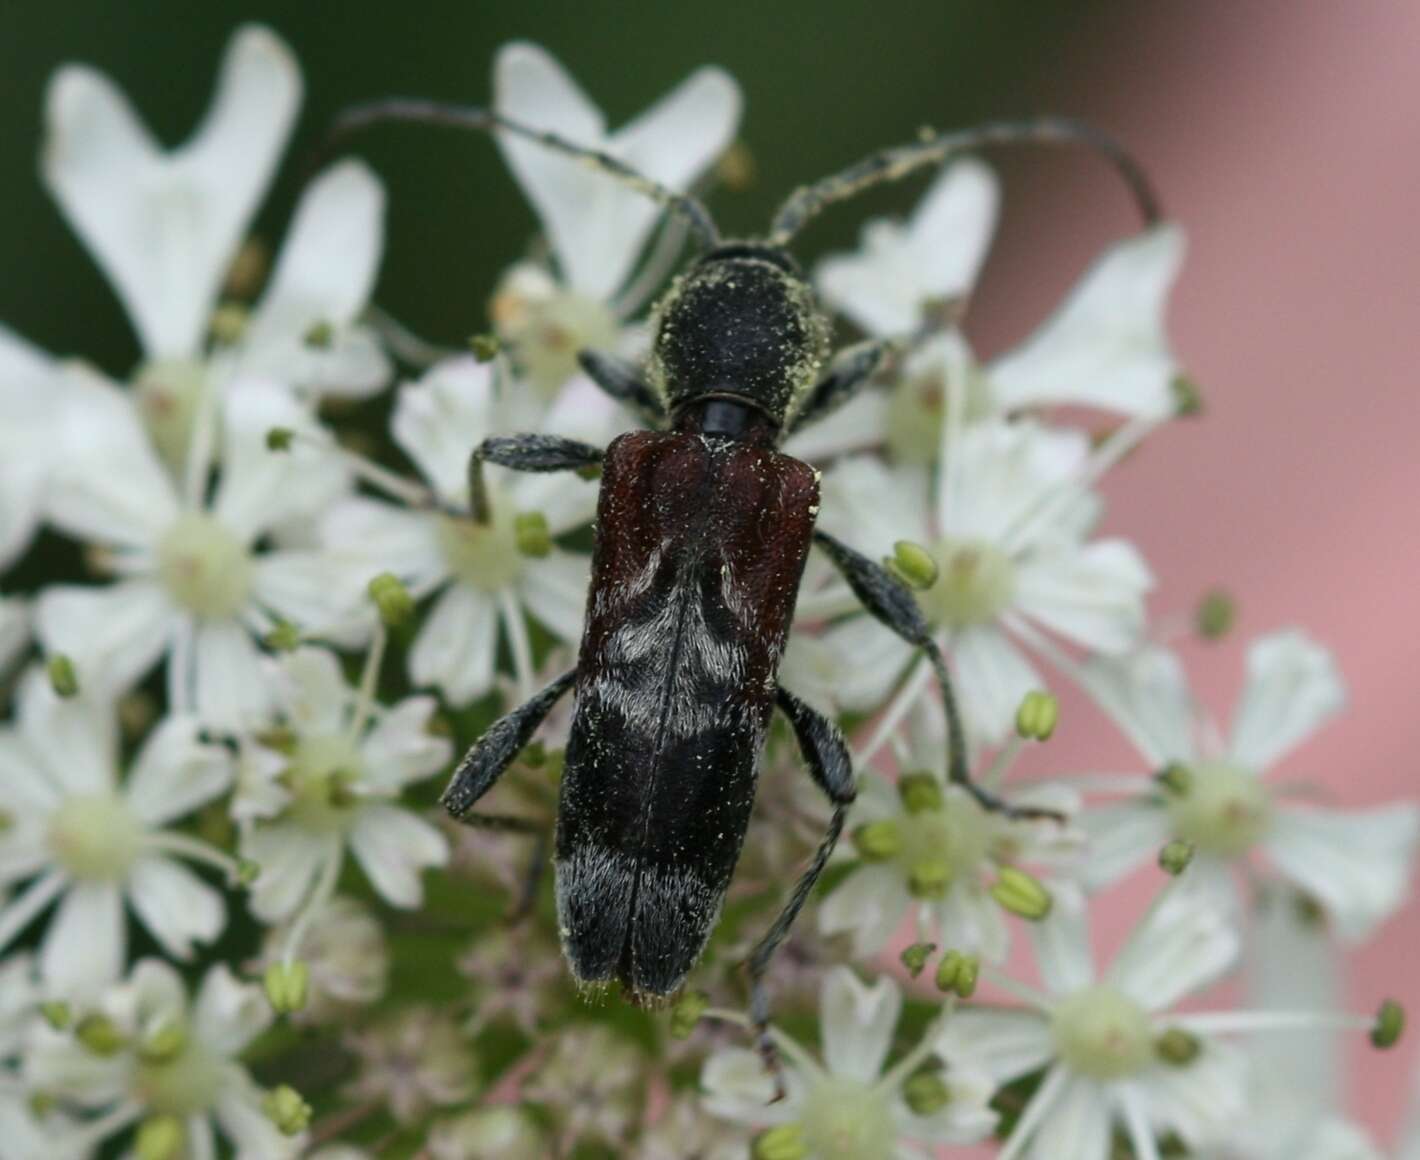 Image of grey-coated longhorn beetle